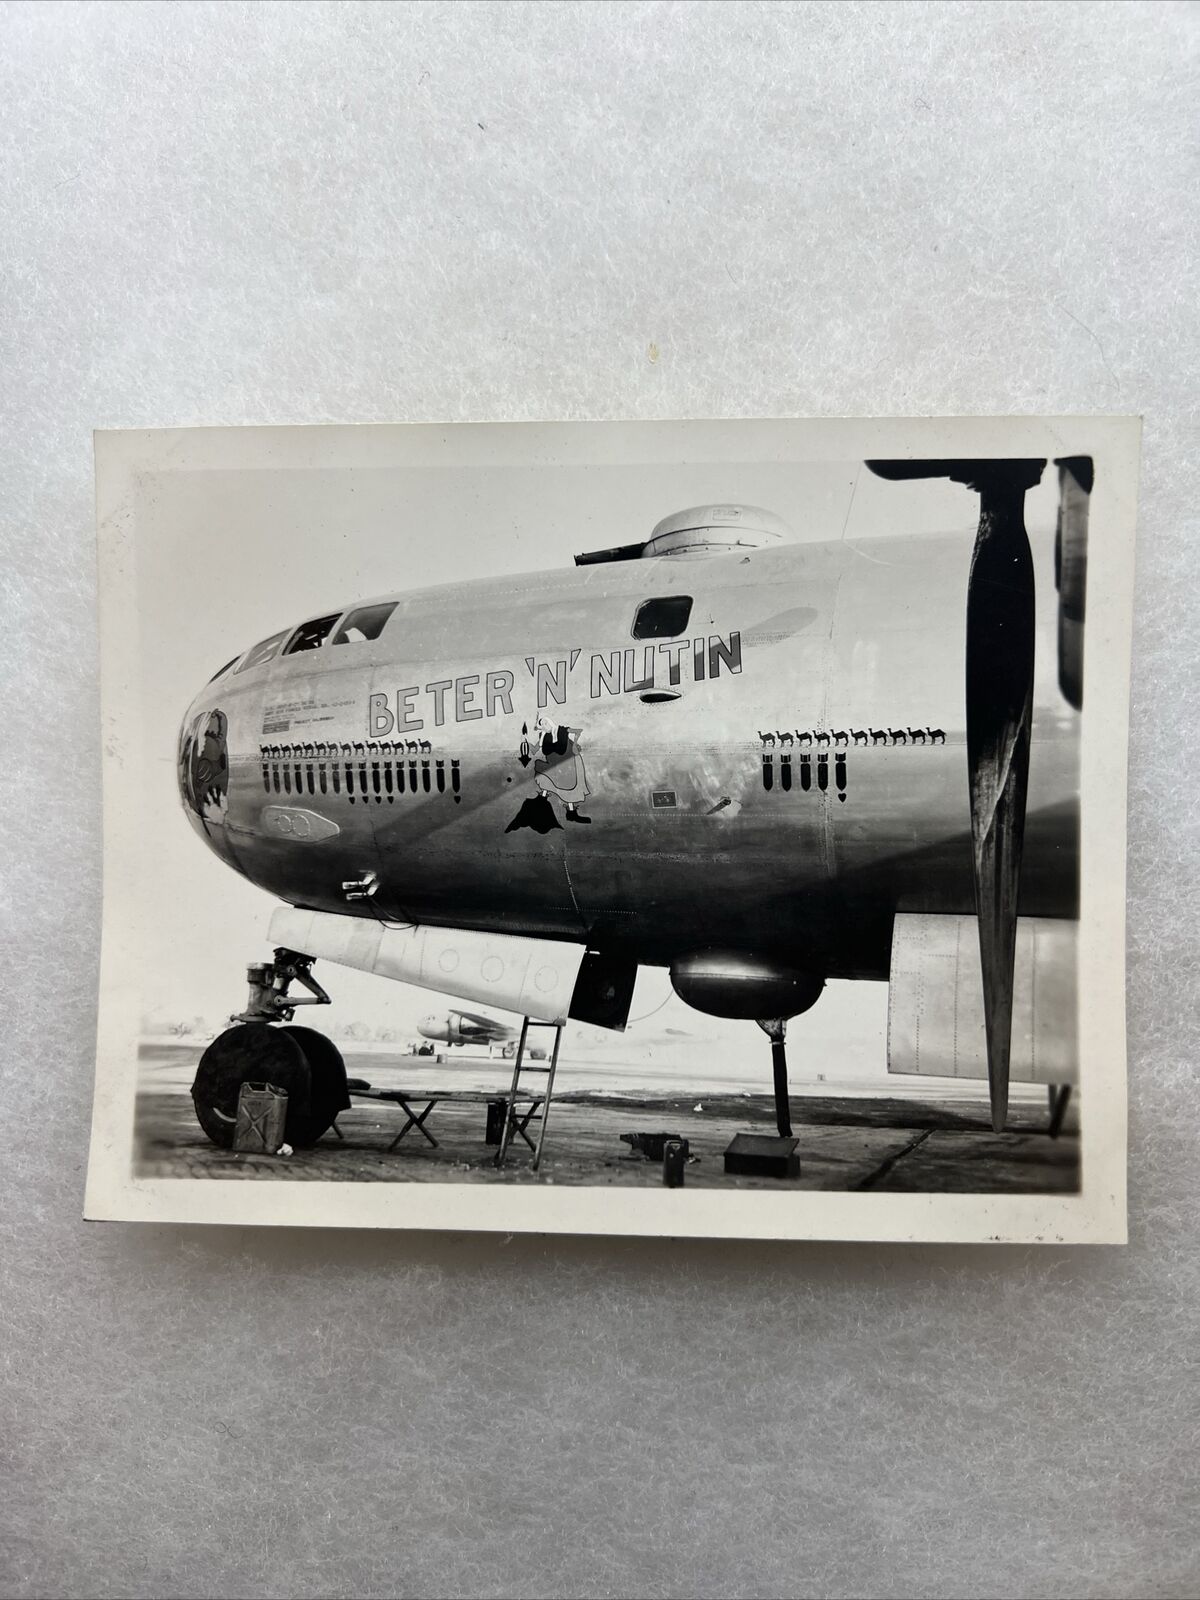 WW2 US Army Air Corps Nose Art Plane Photo “Better N Nutin” (V85